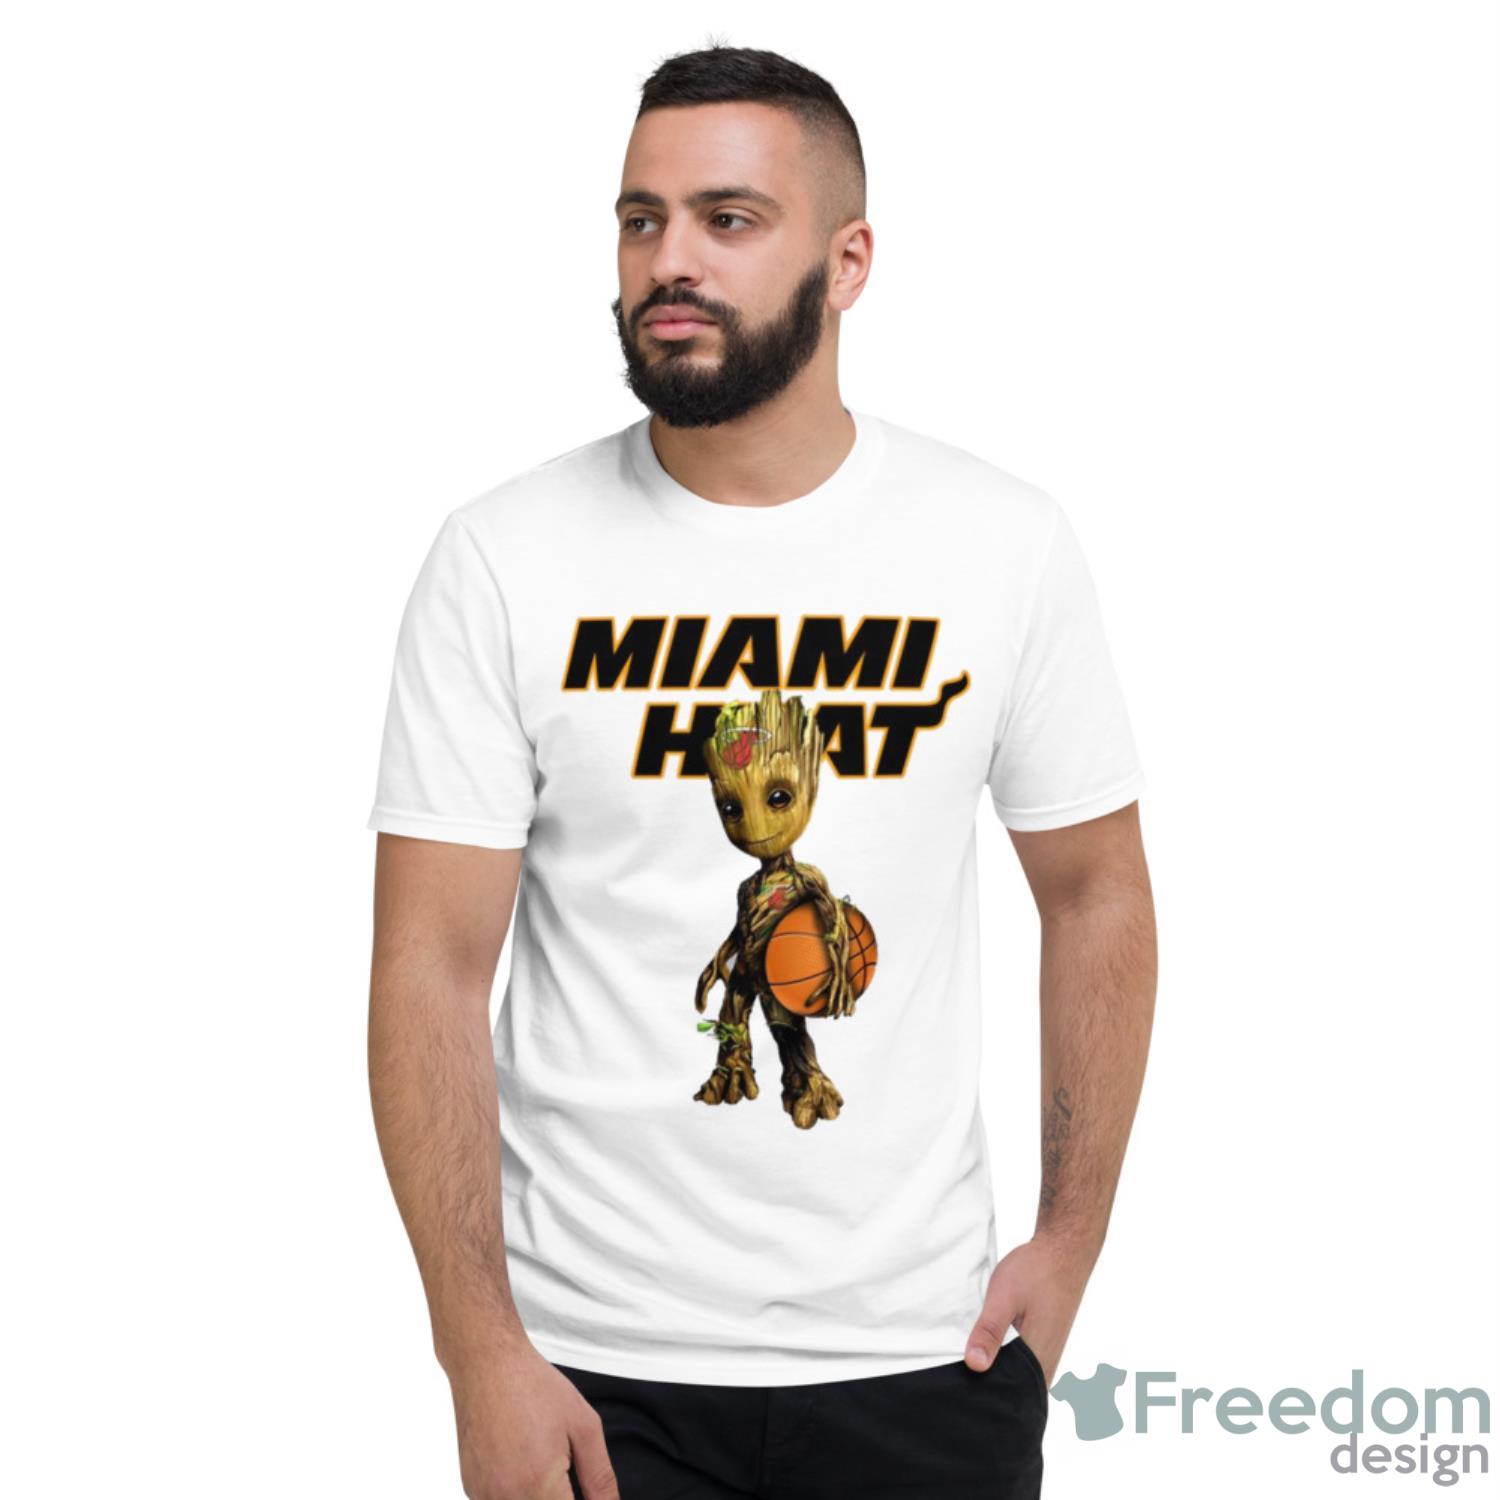 Her Universe NBA Miami Heat T-Shirt